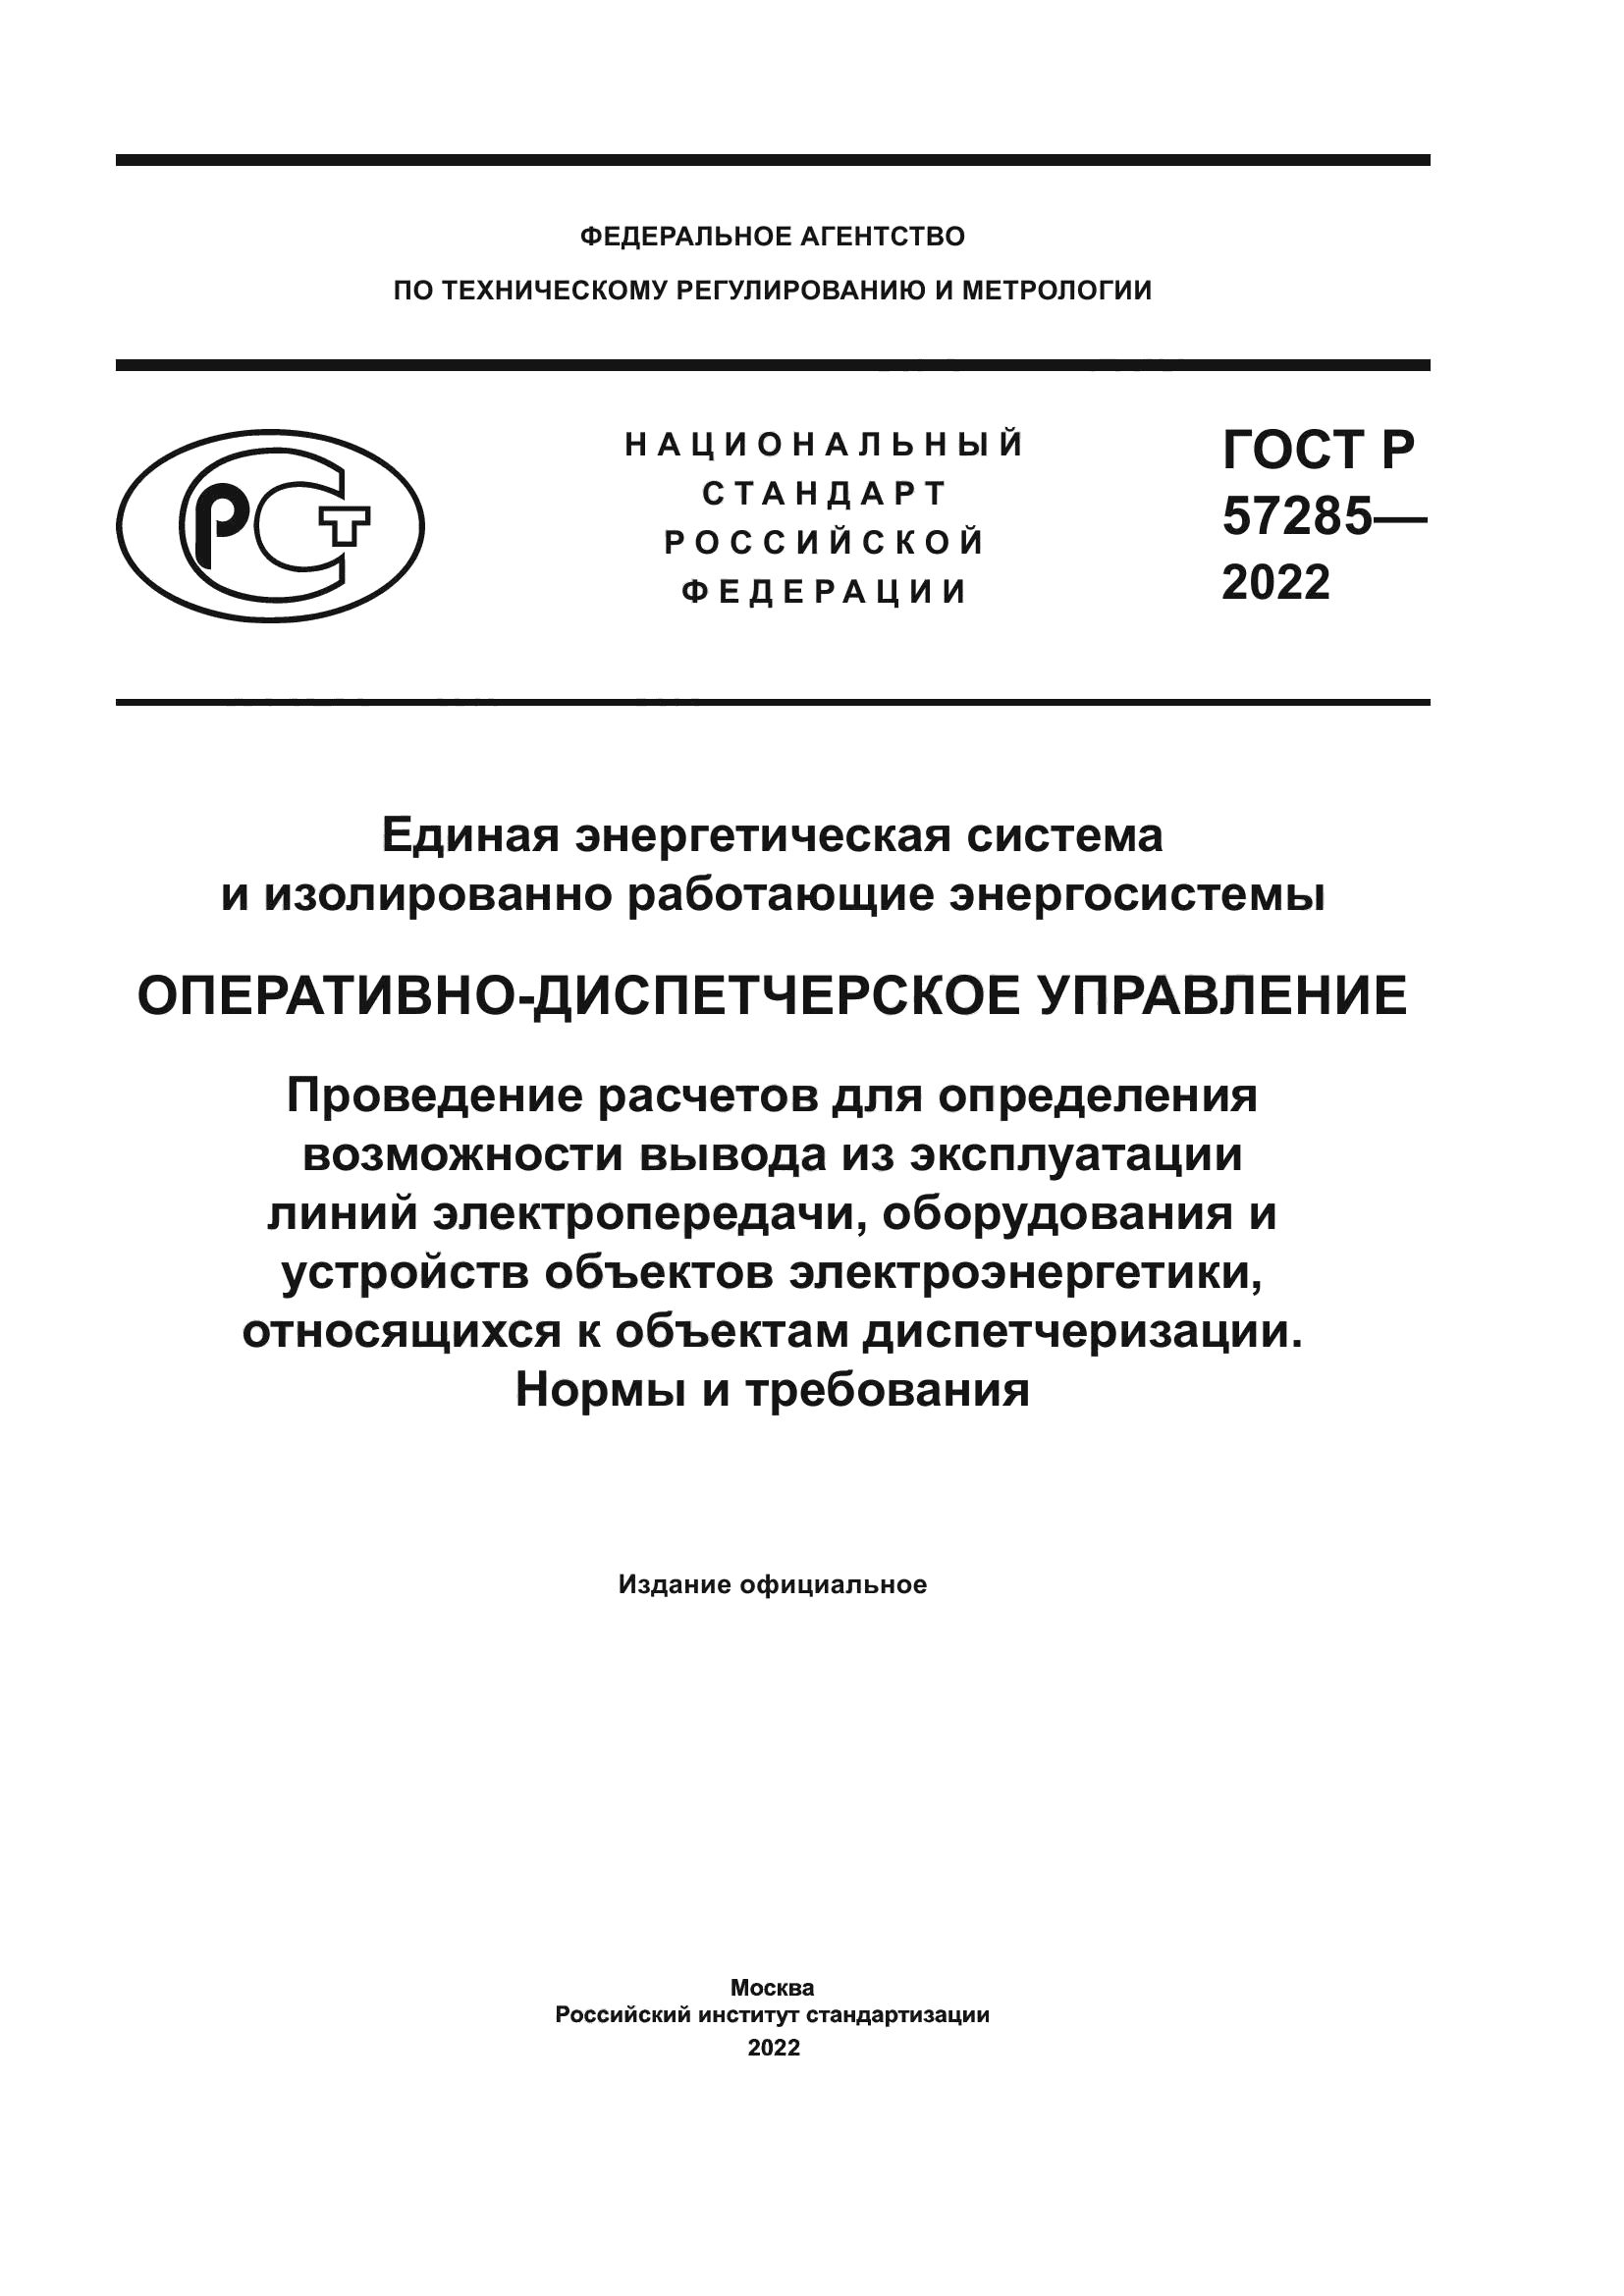 ГОСТ Р 57285-2022